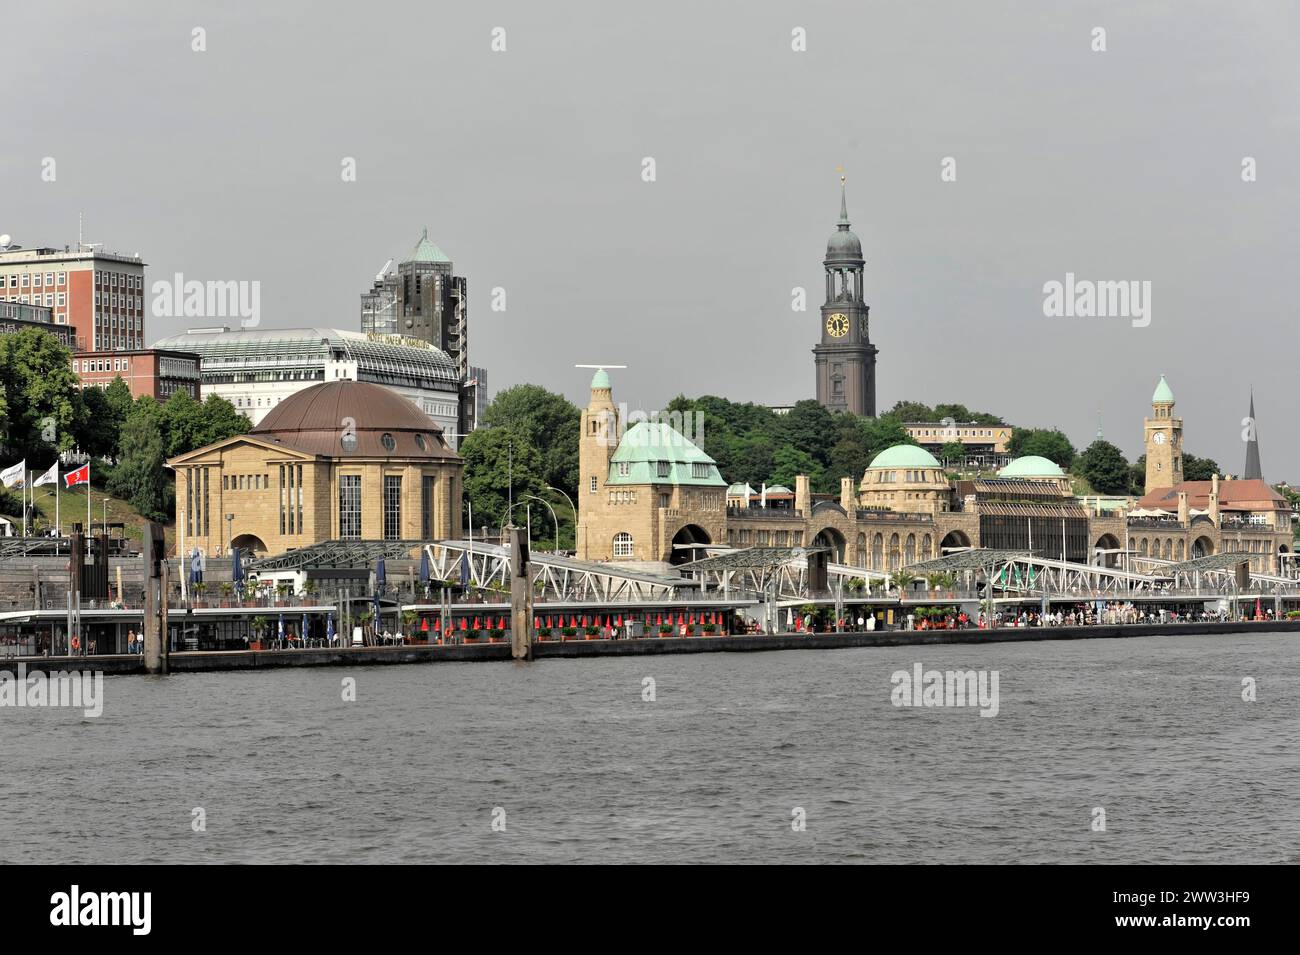 The Hamburg Landungsbruecken with surrounding buildings under a clear sky, Hamburg, Hanseatic City of Hamburg, Germany Stock Photo